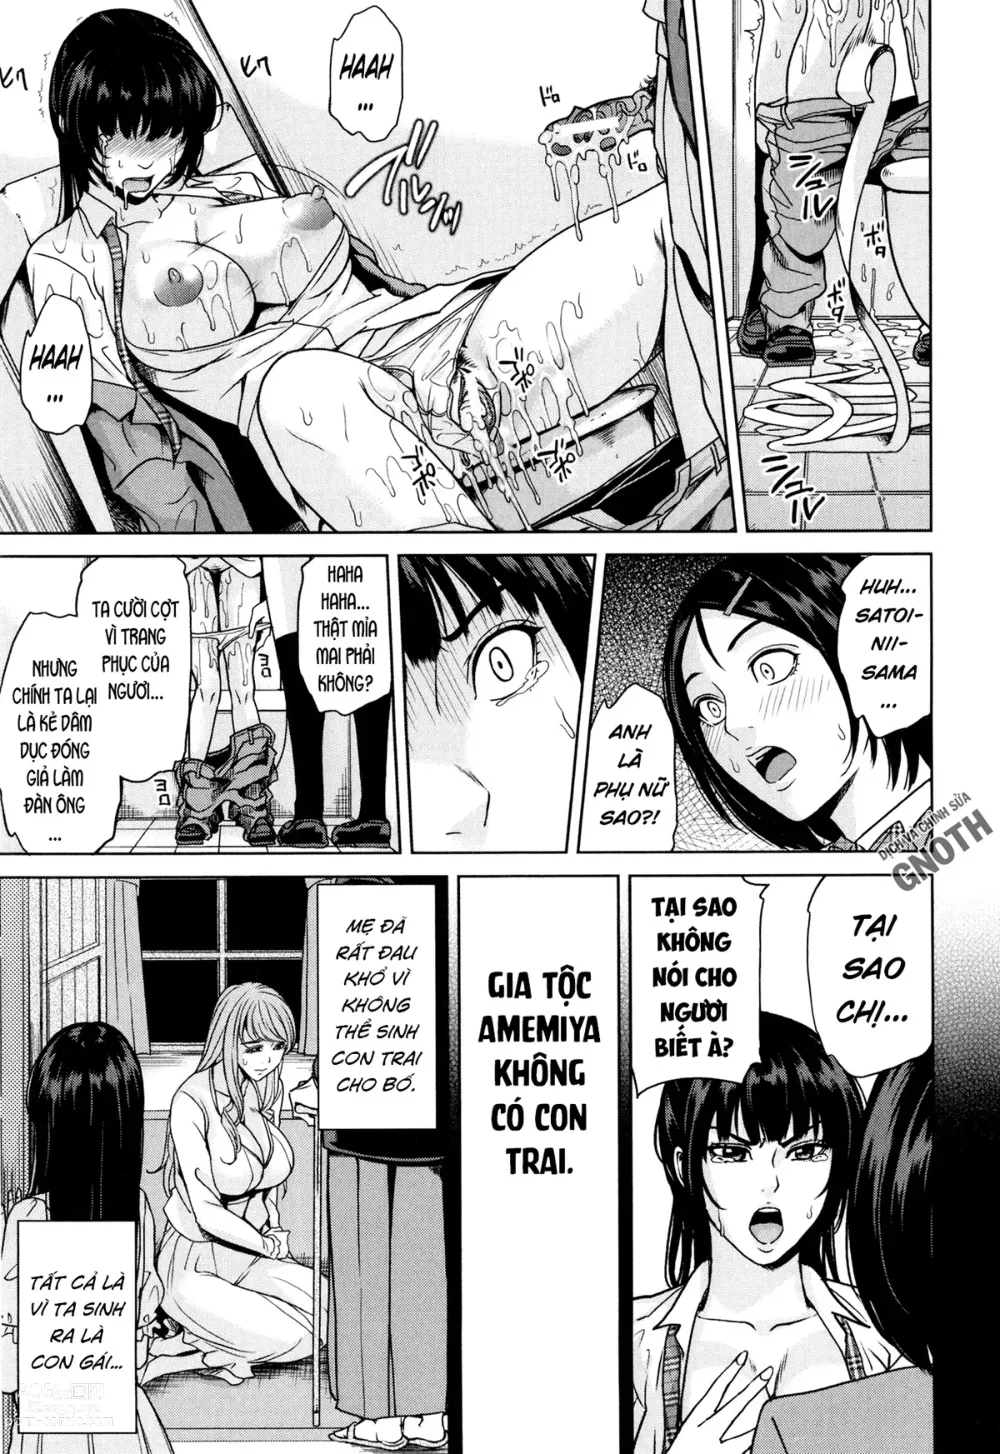 Page 52 of manga Amemiyakeno Kodukuri